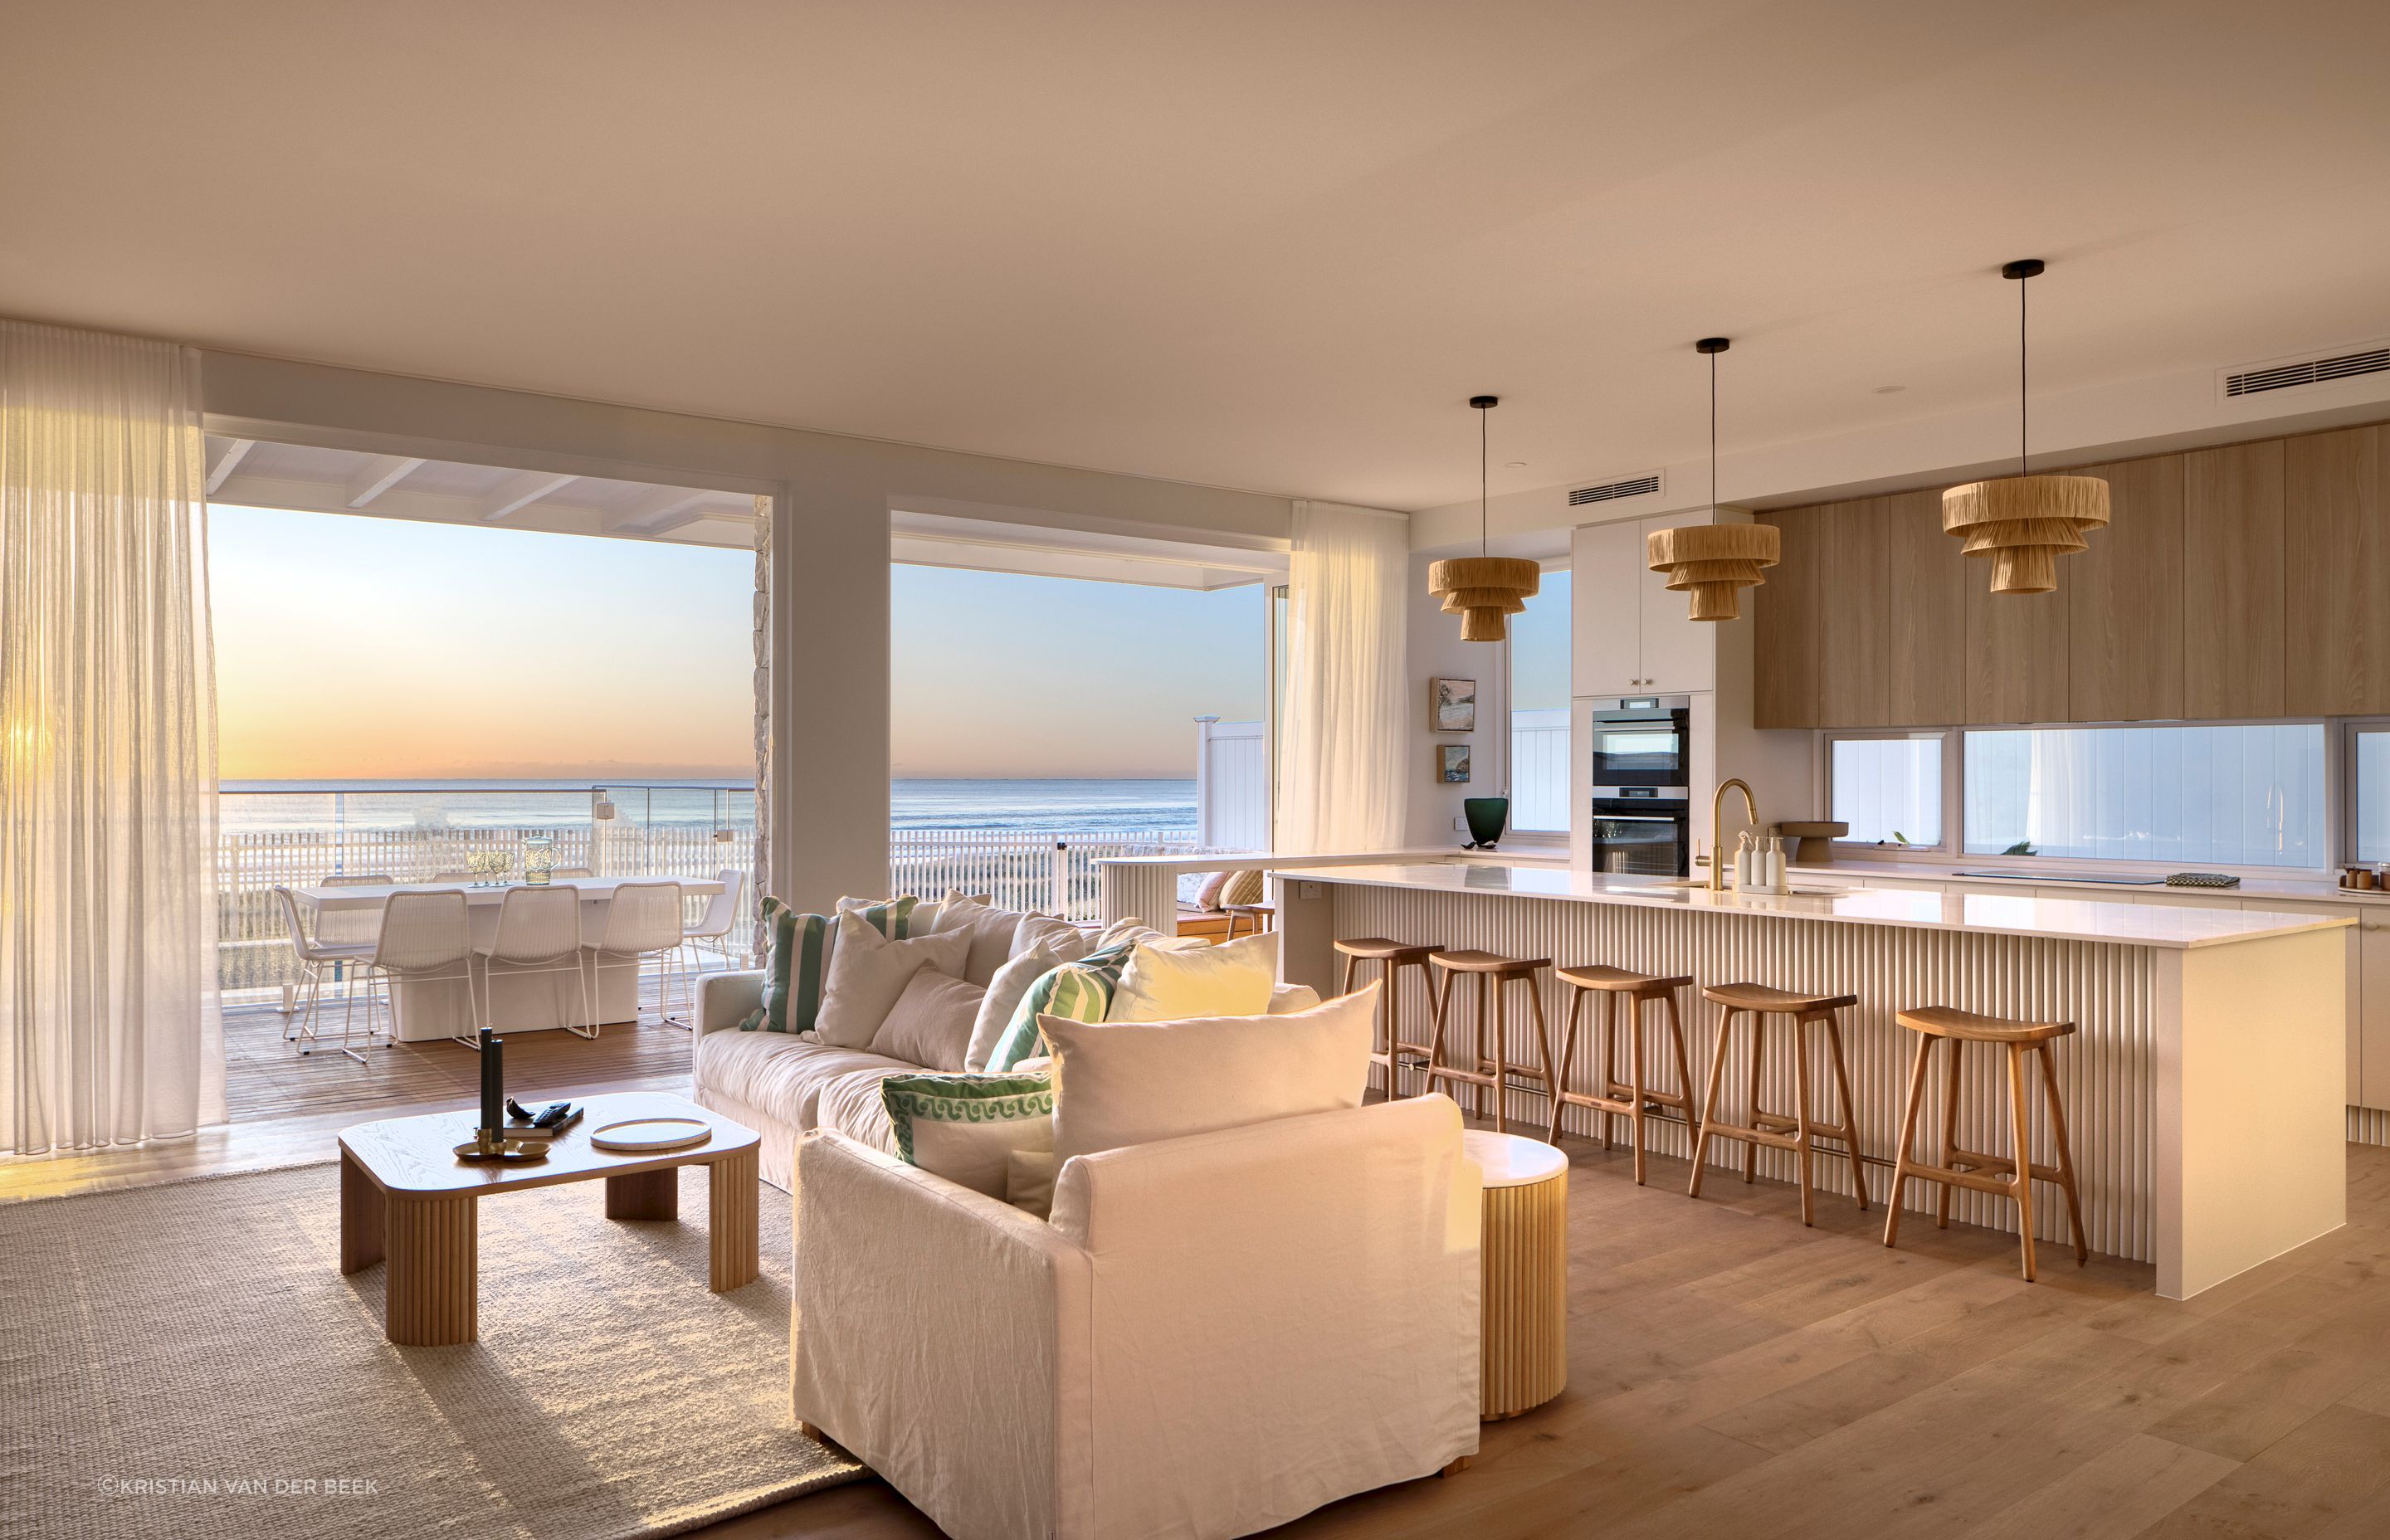 A warm neutral palette promotes a relaxed coastal lifestyle | Habitat Studio Architects